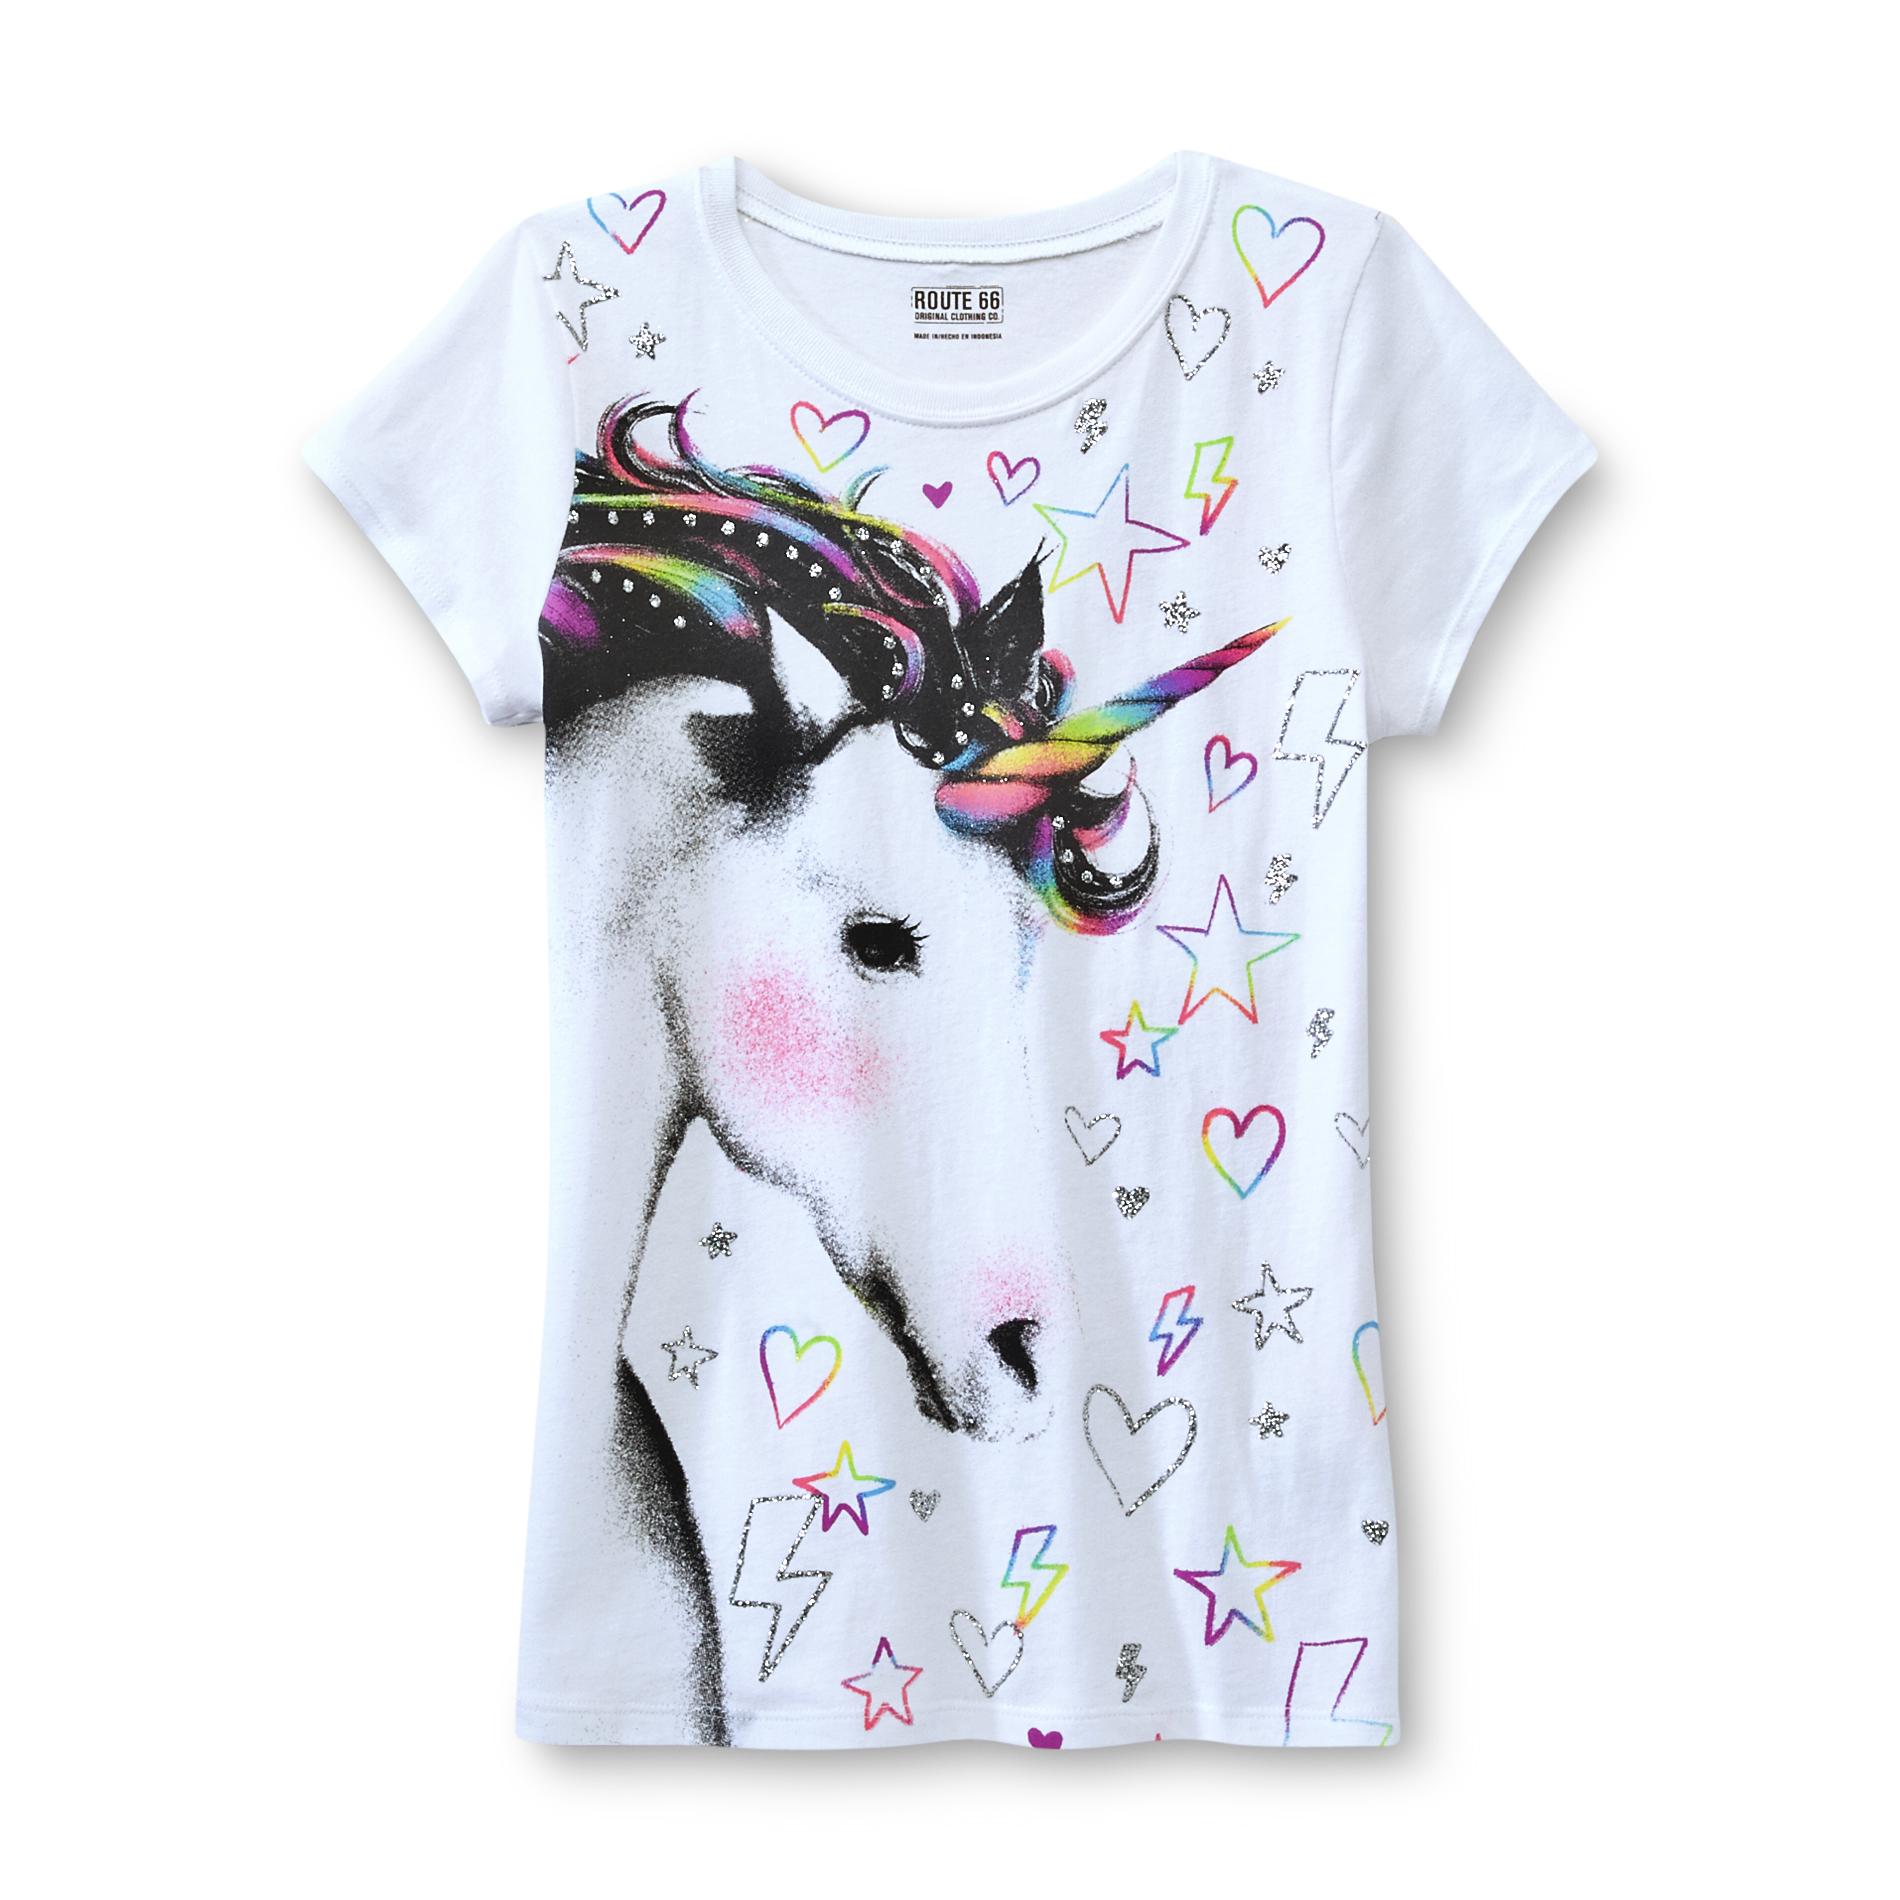 Route 66 Girls' Glitter T-Shirt - Unicorn